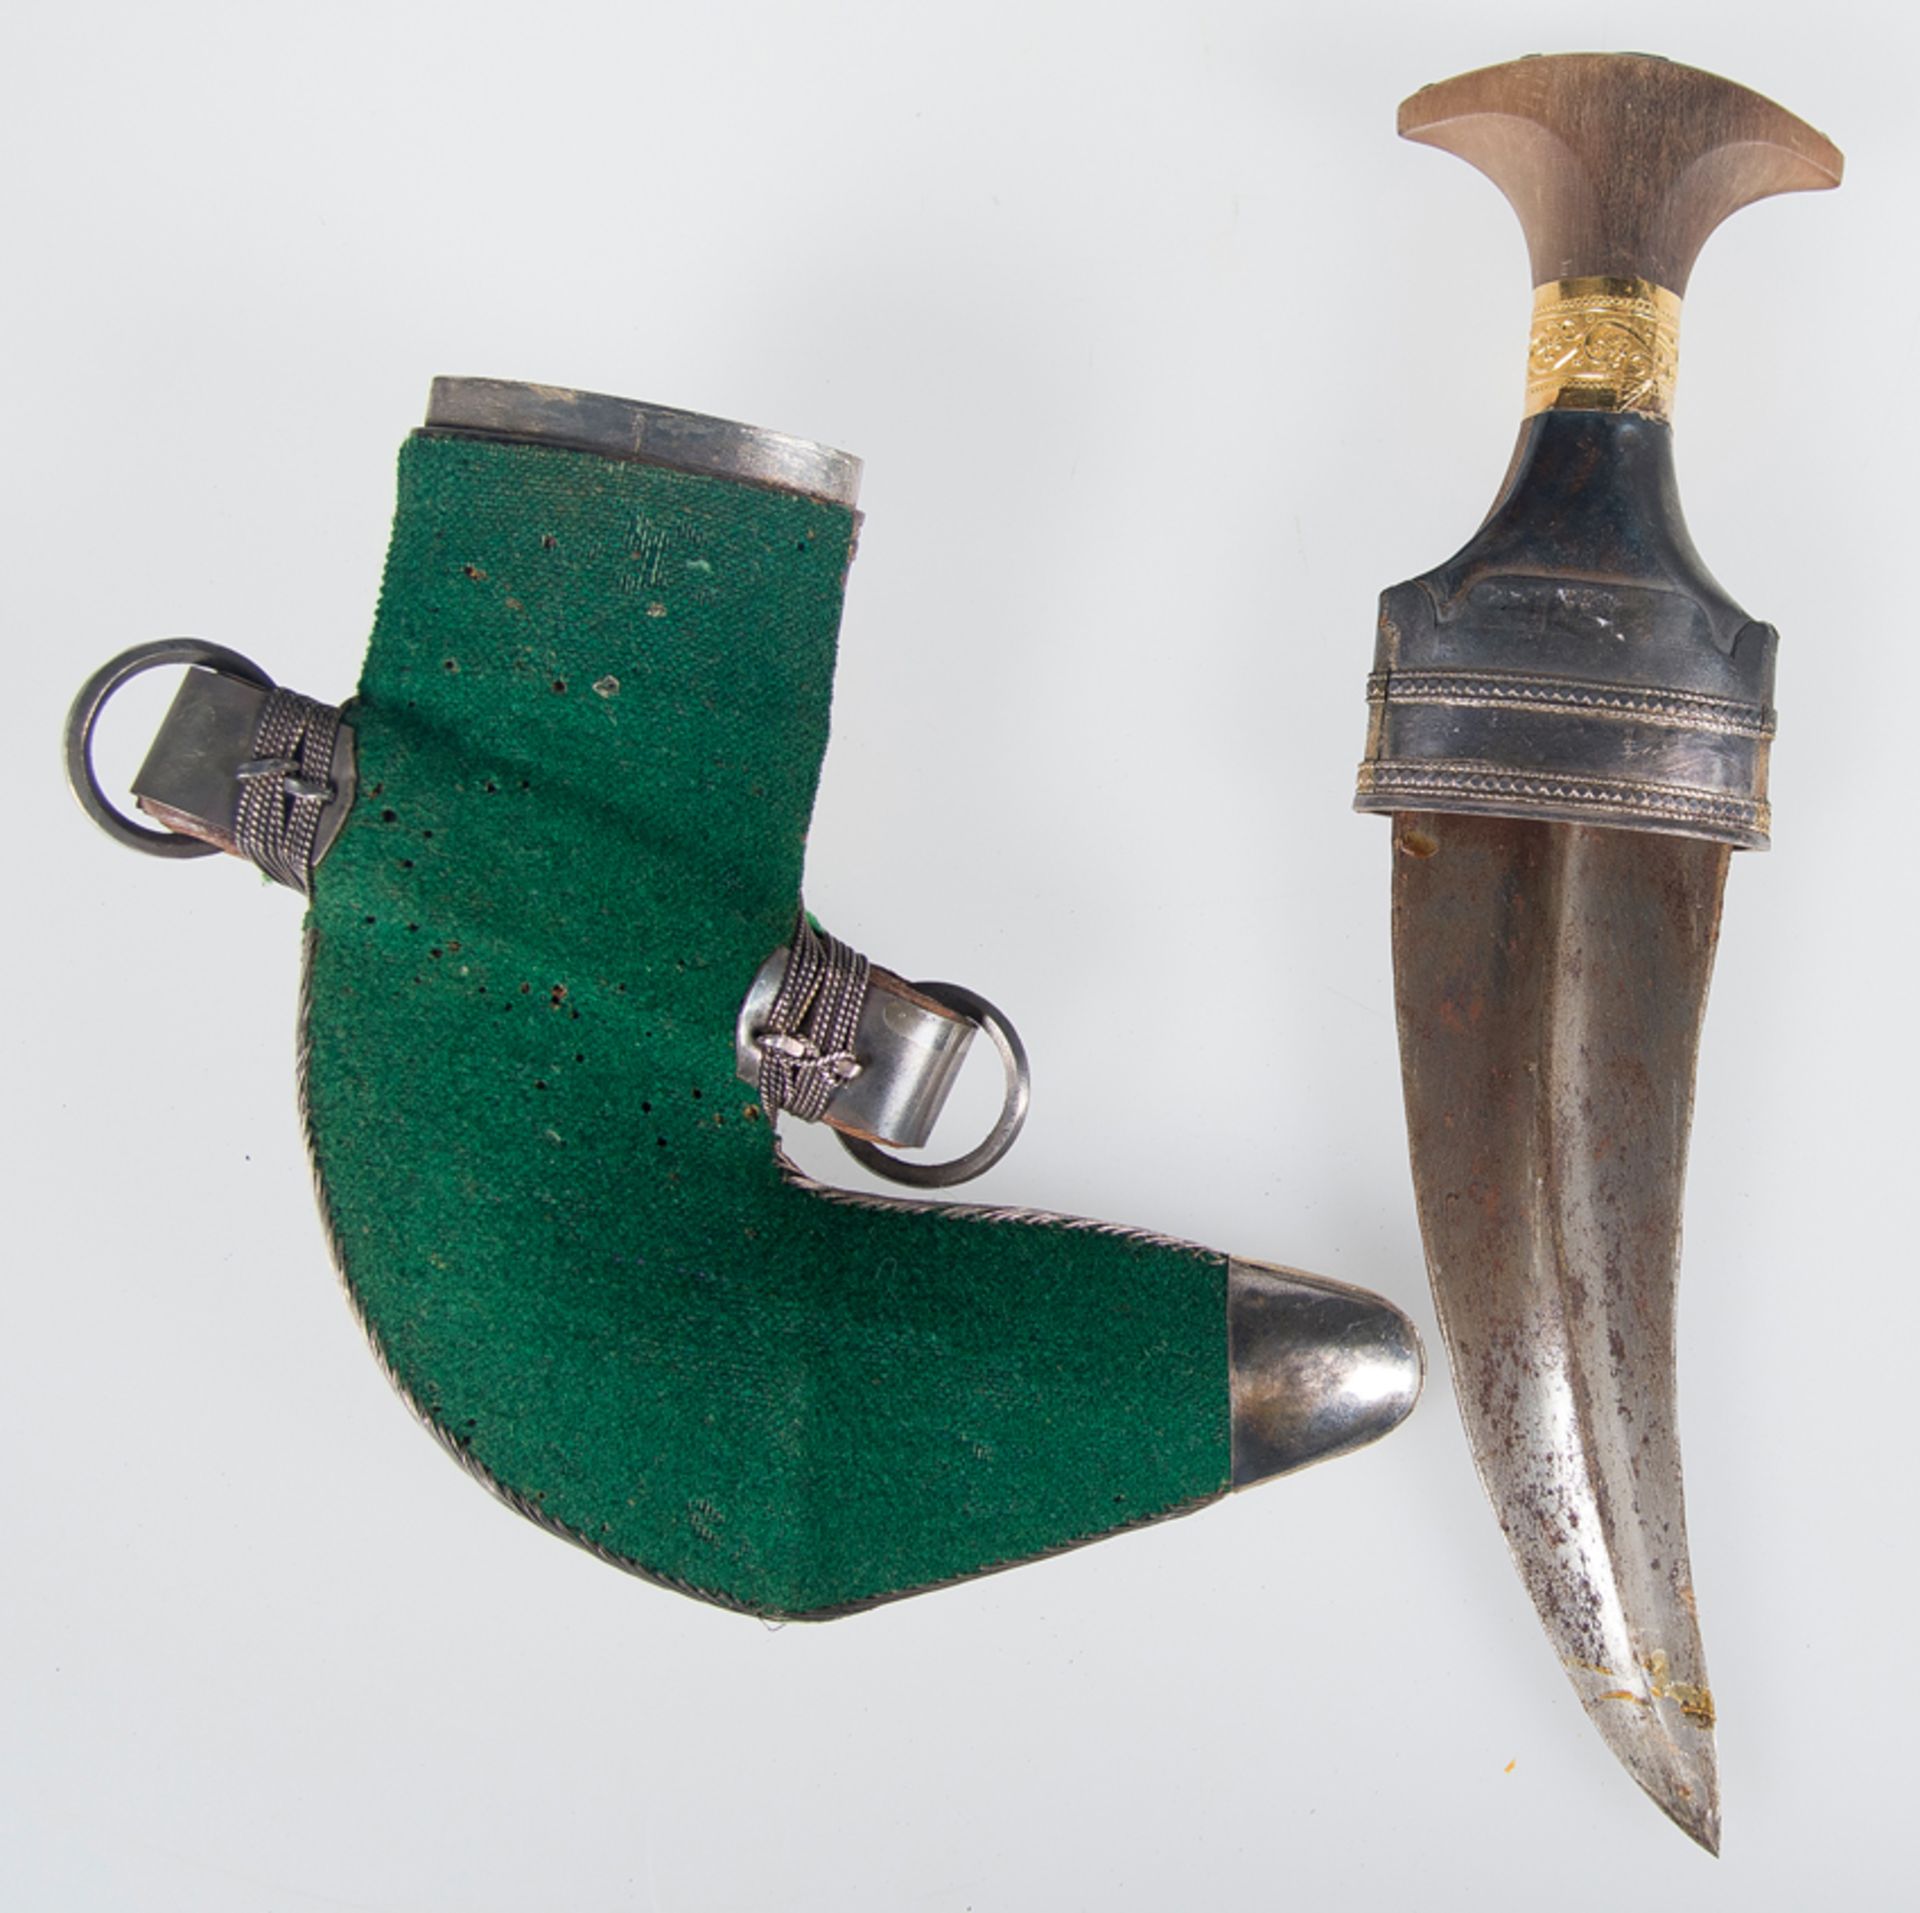 Arabian dagger. Possibly Yemen. Late 19th century - early 20th century. - Image 3 of 3